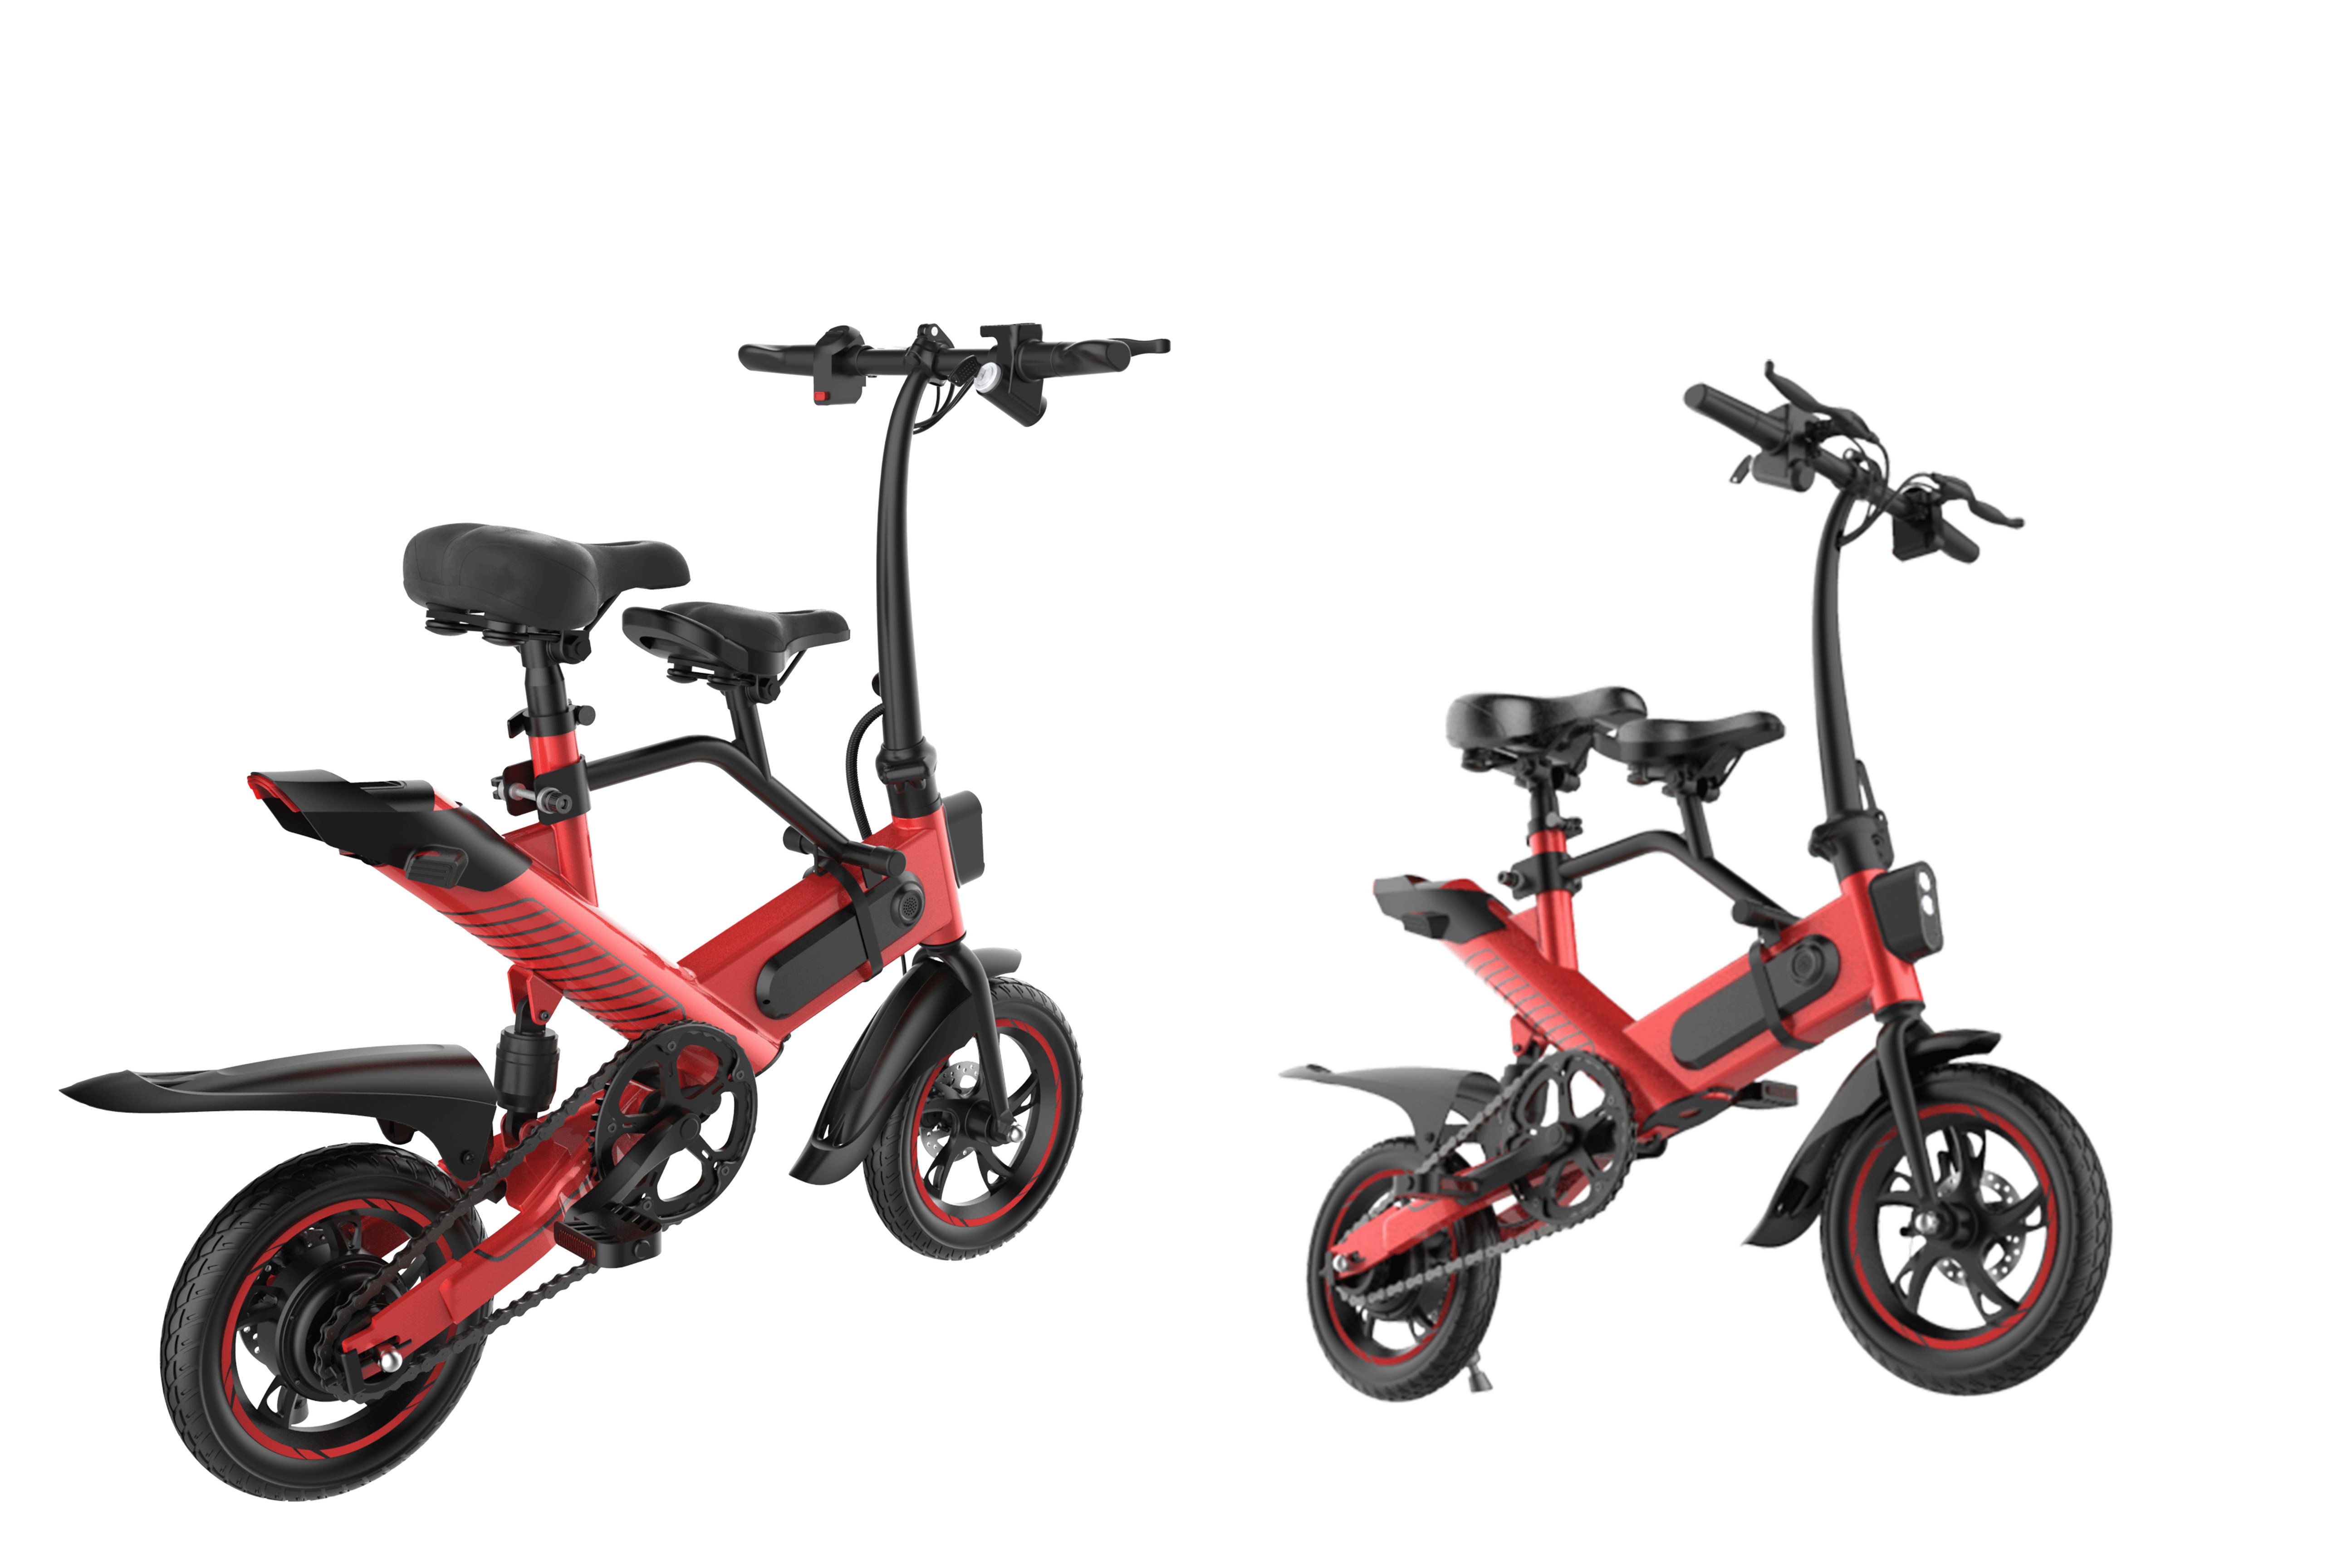  Multi Functional Electric Folding Road Bike Maximum Load 120kg For Commuting Manufactures